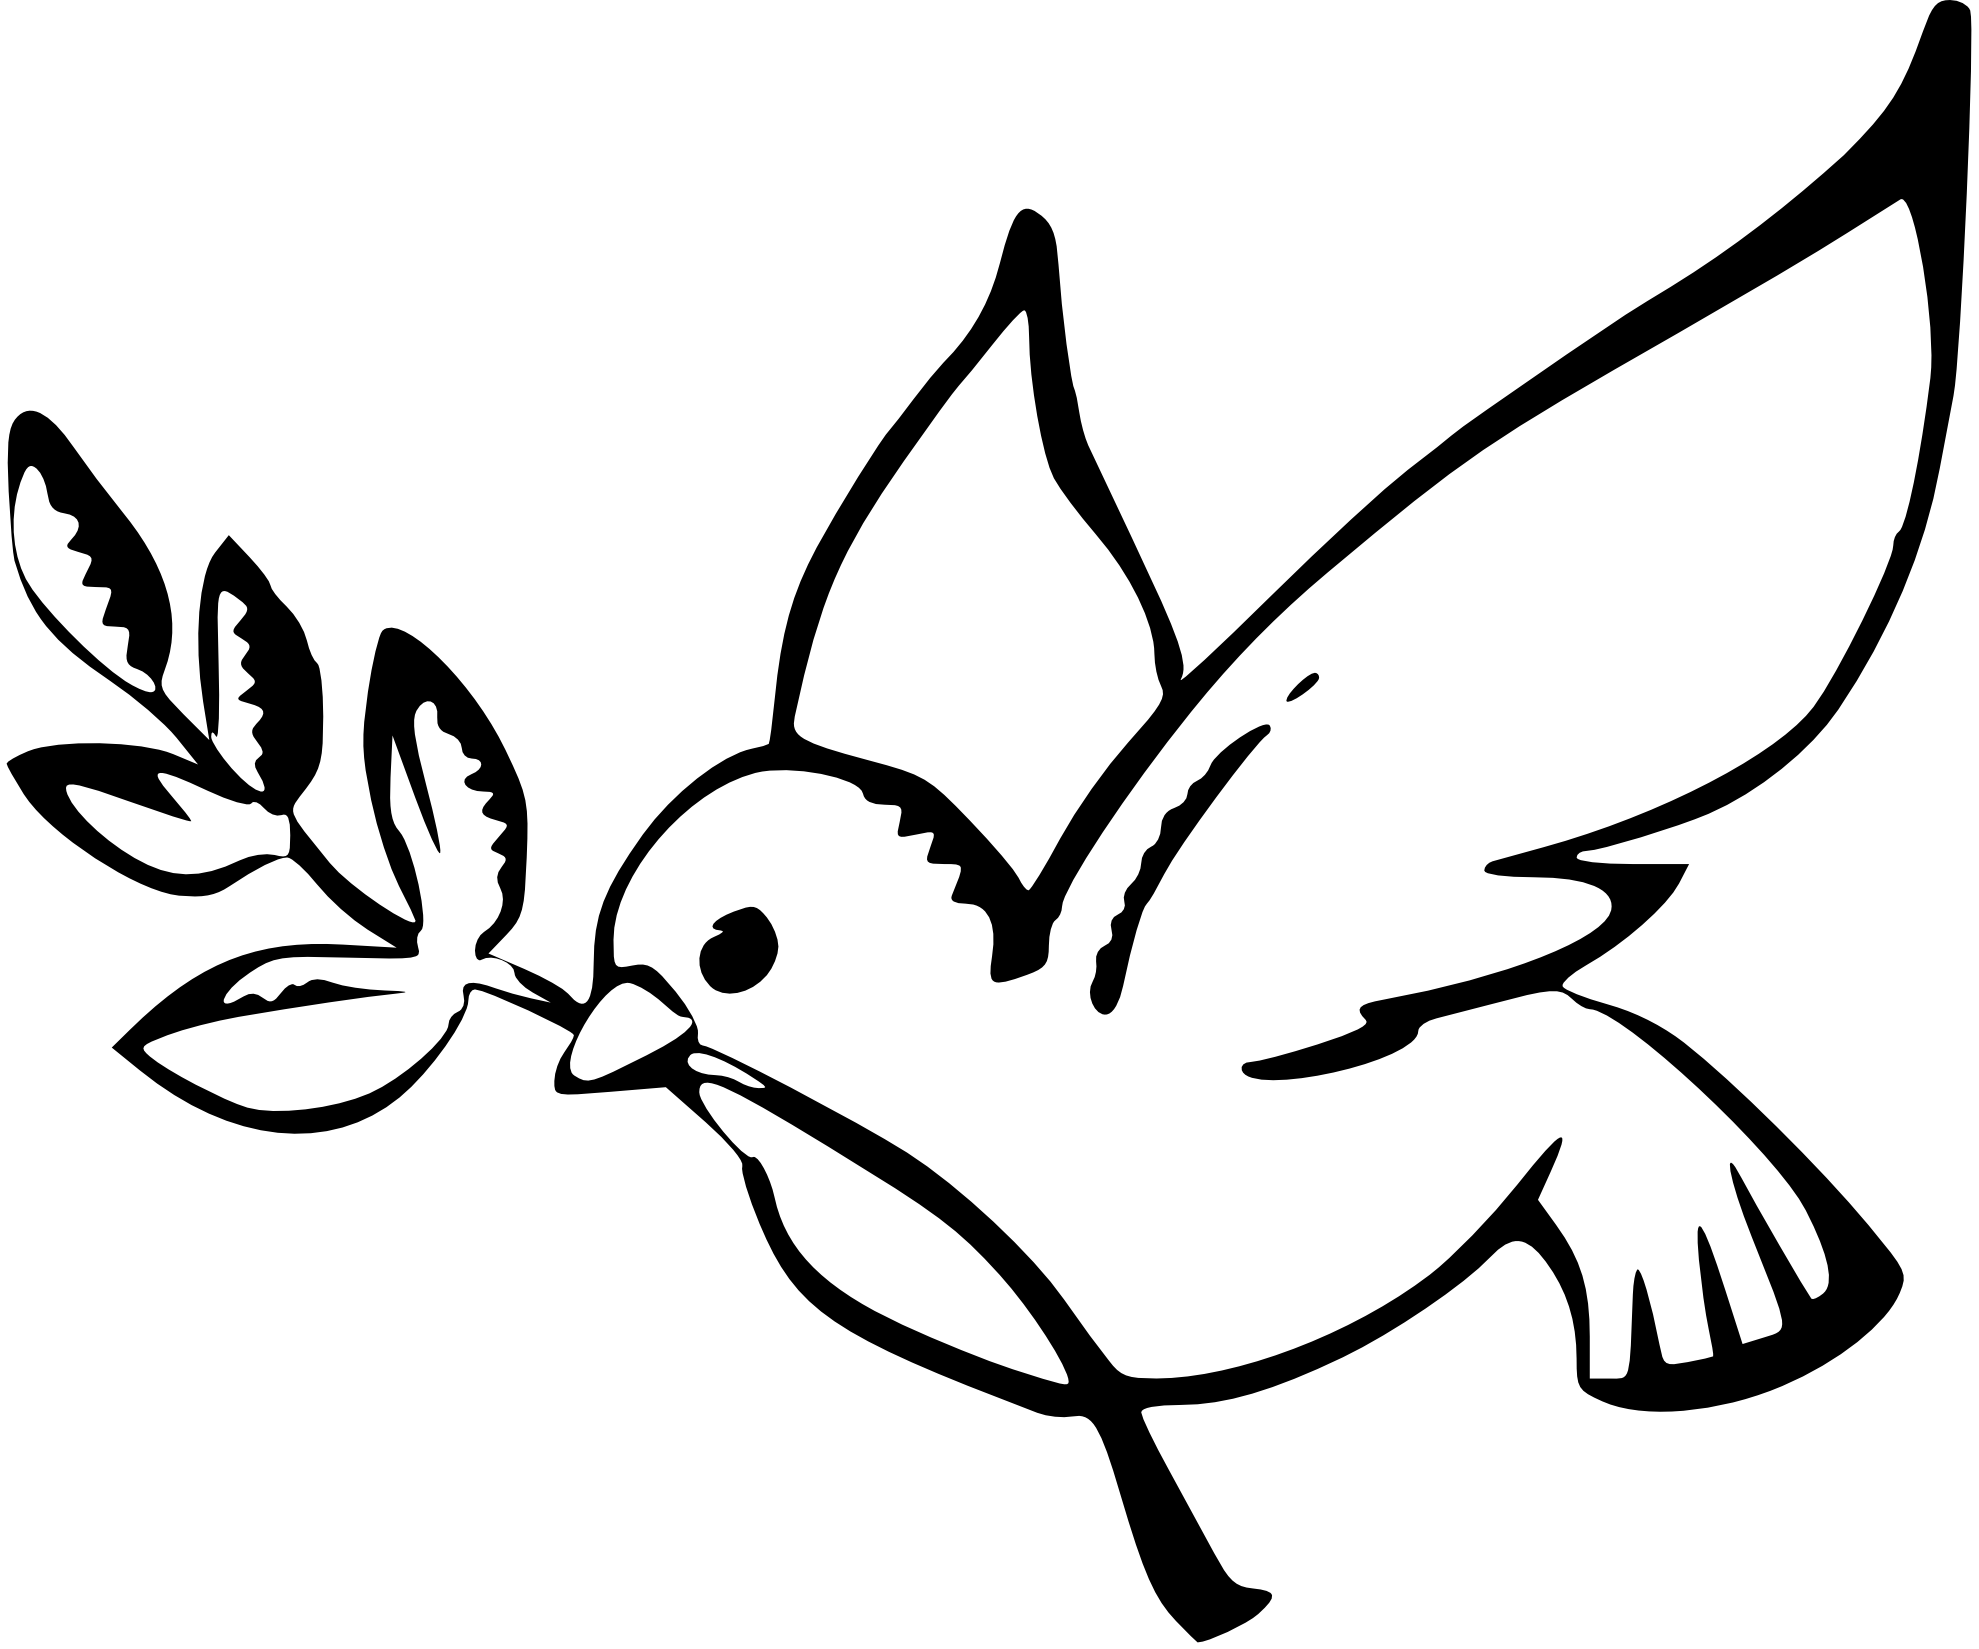 Clip Art Dove Peace Black White Line Christmas Xmas - Clipart library 